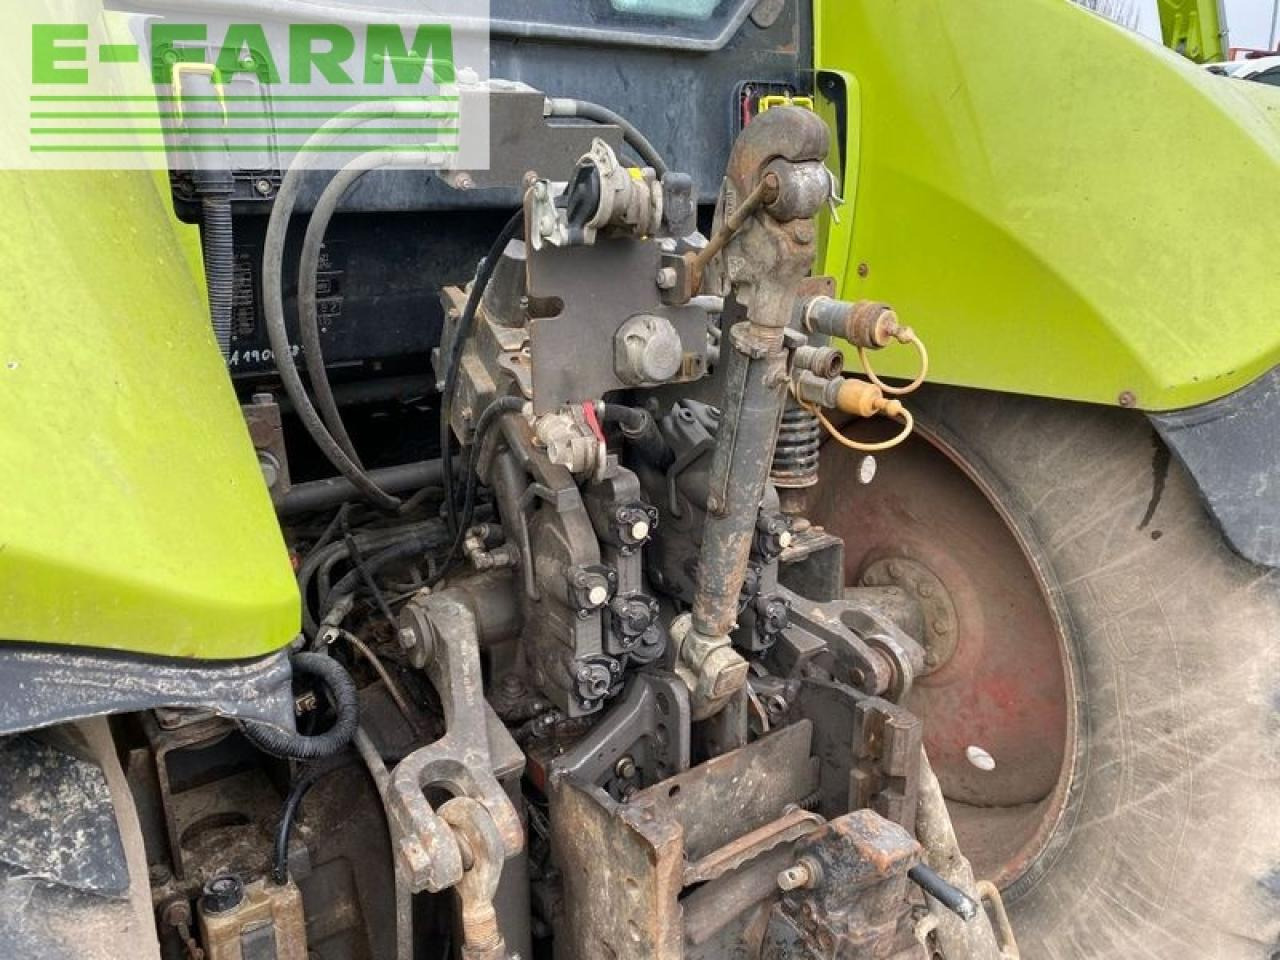 Farm tractor CLAAS arion 620 cis